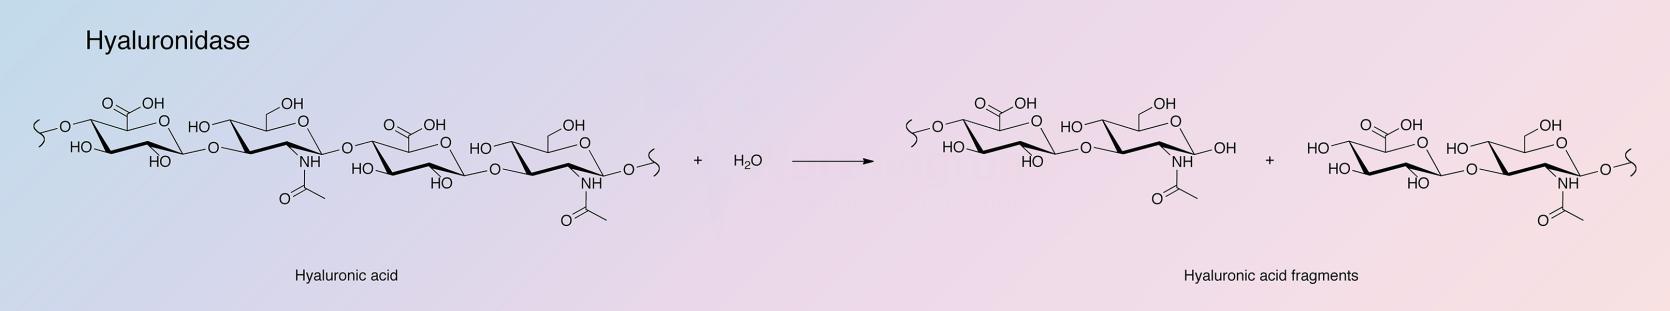 Hyaluronidase Enzymatic Reaction